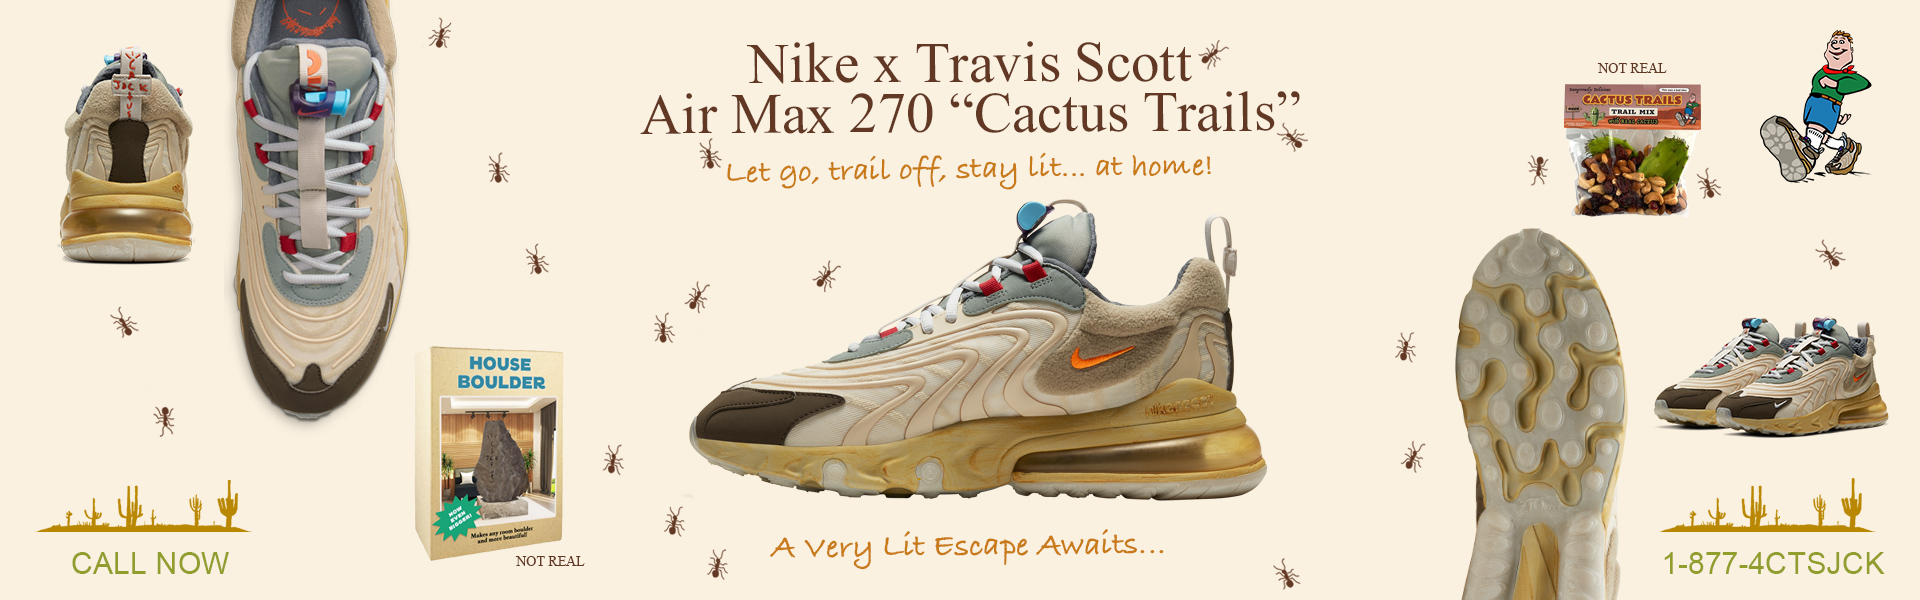 cactus jack shoes air max